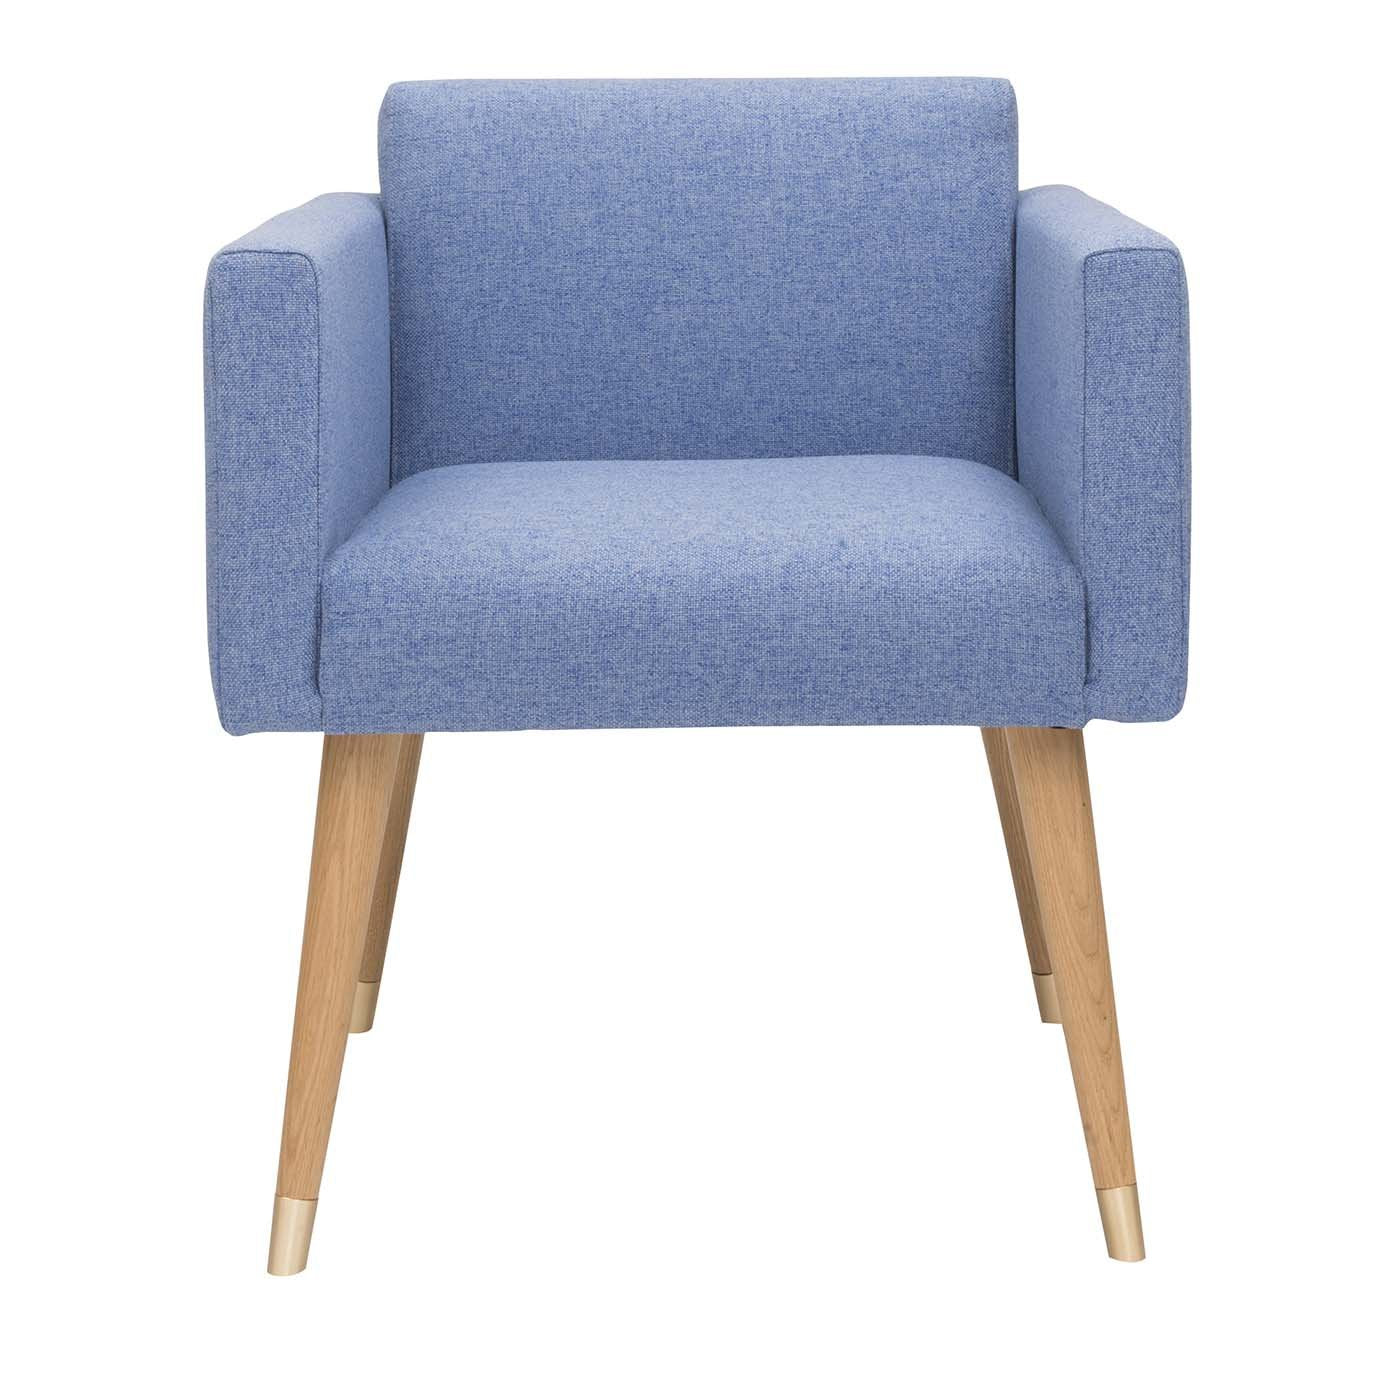 Pantarei Woodcone Blue Chair - Main view